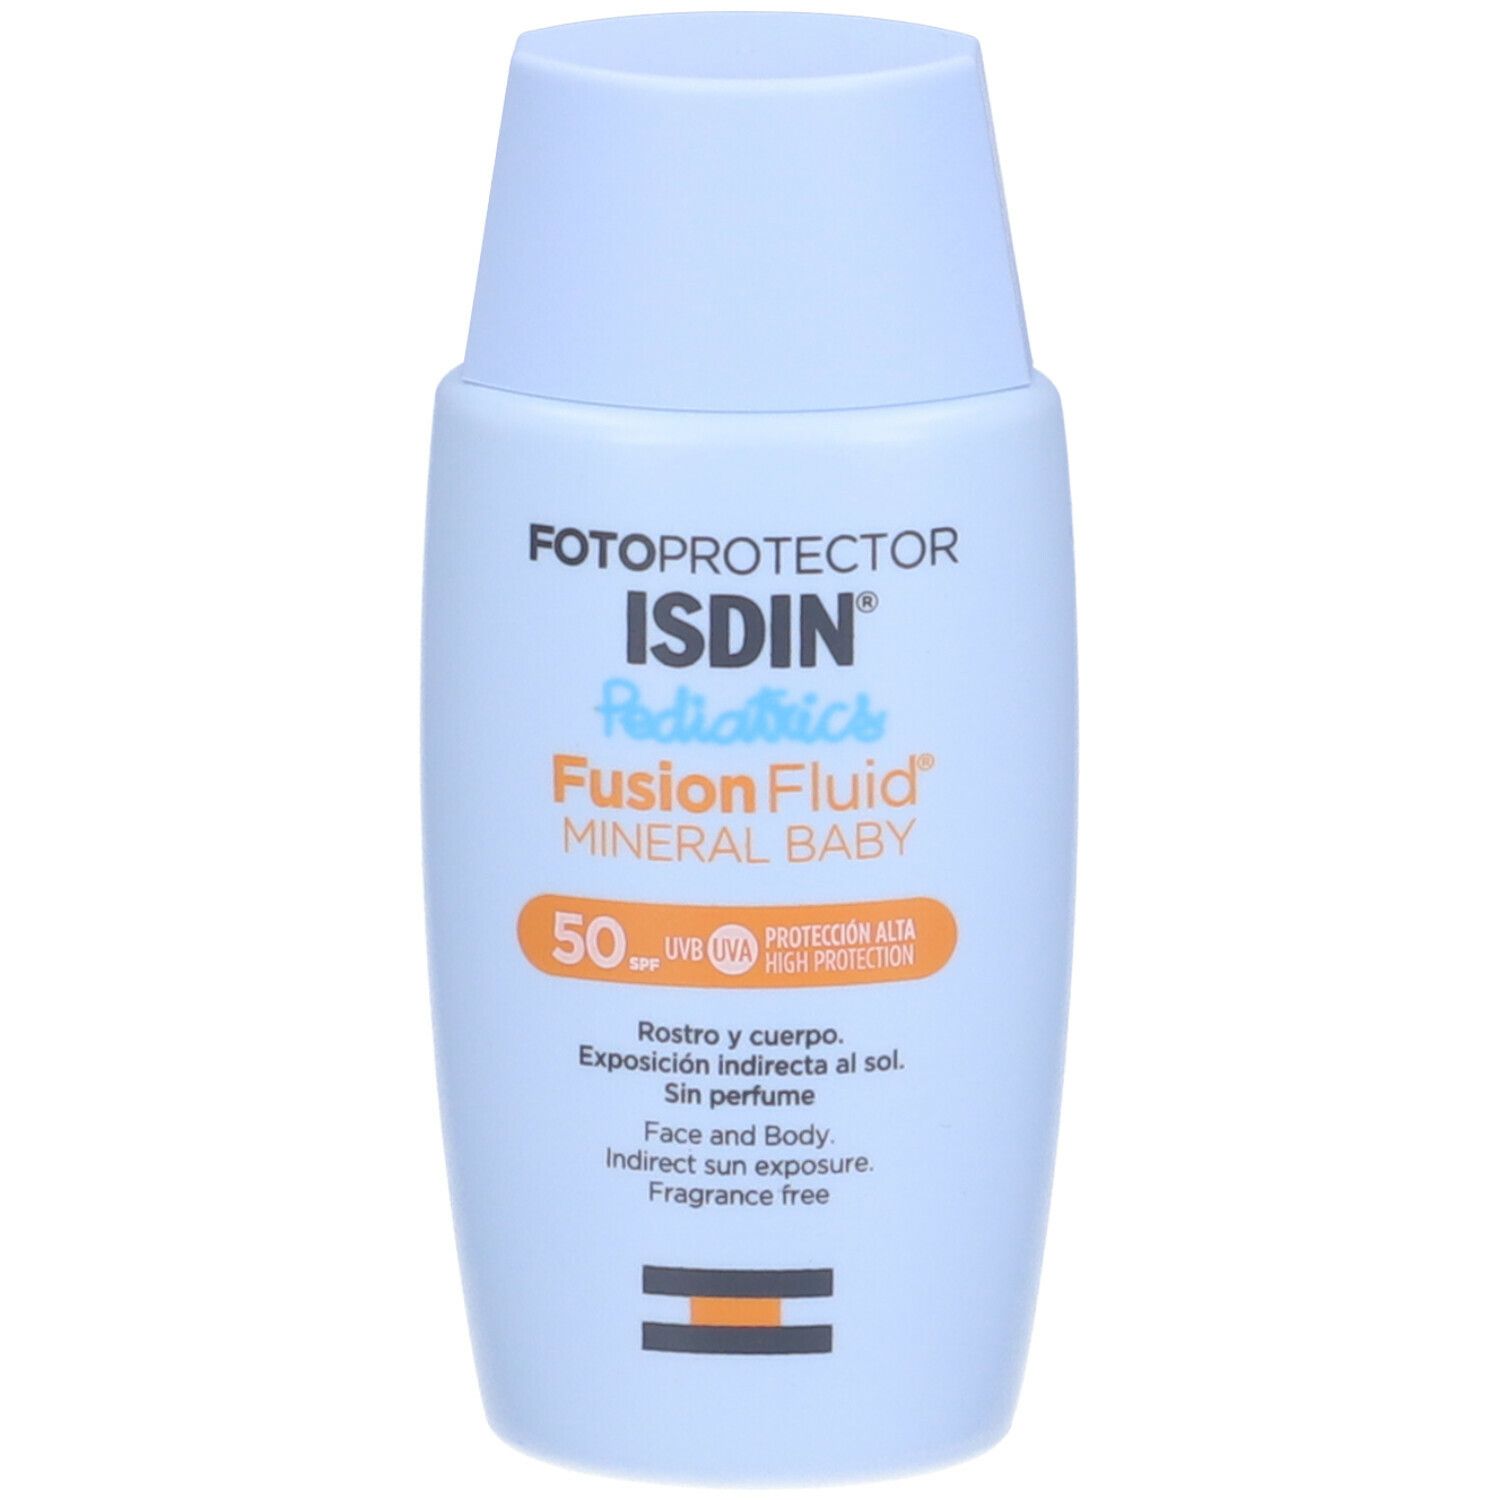 Isdin Fotoprotector ISDIN Fusion Fluid MINERAL BABY Pediatrics SPF 50+